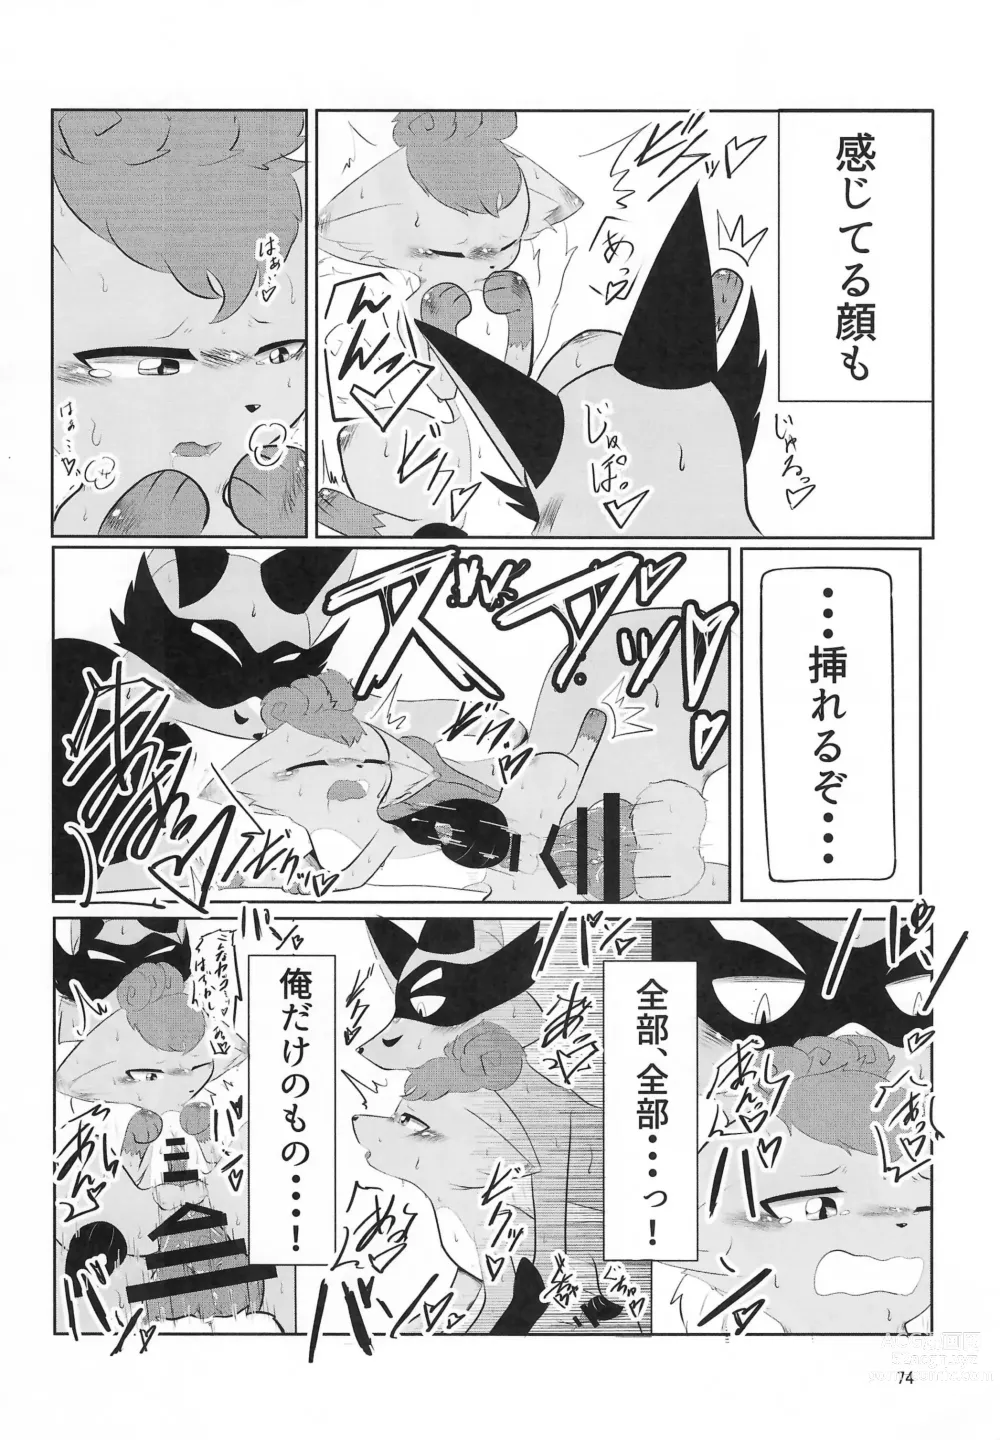 Page 74 of doujinshi Yotsu Ashi BL Anthology K9S